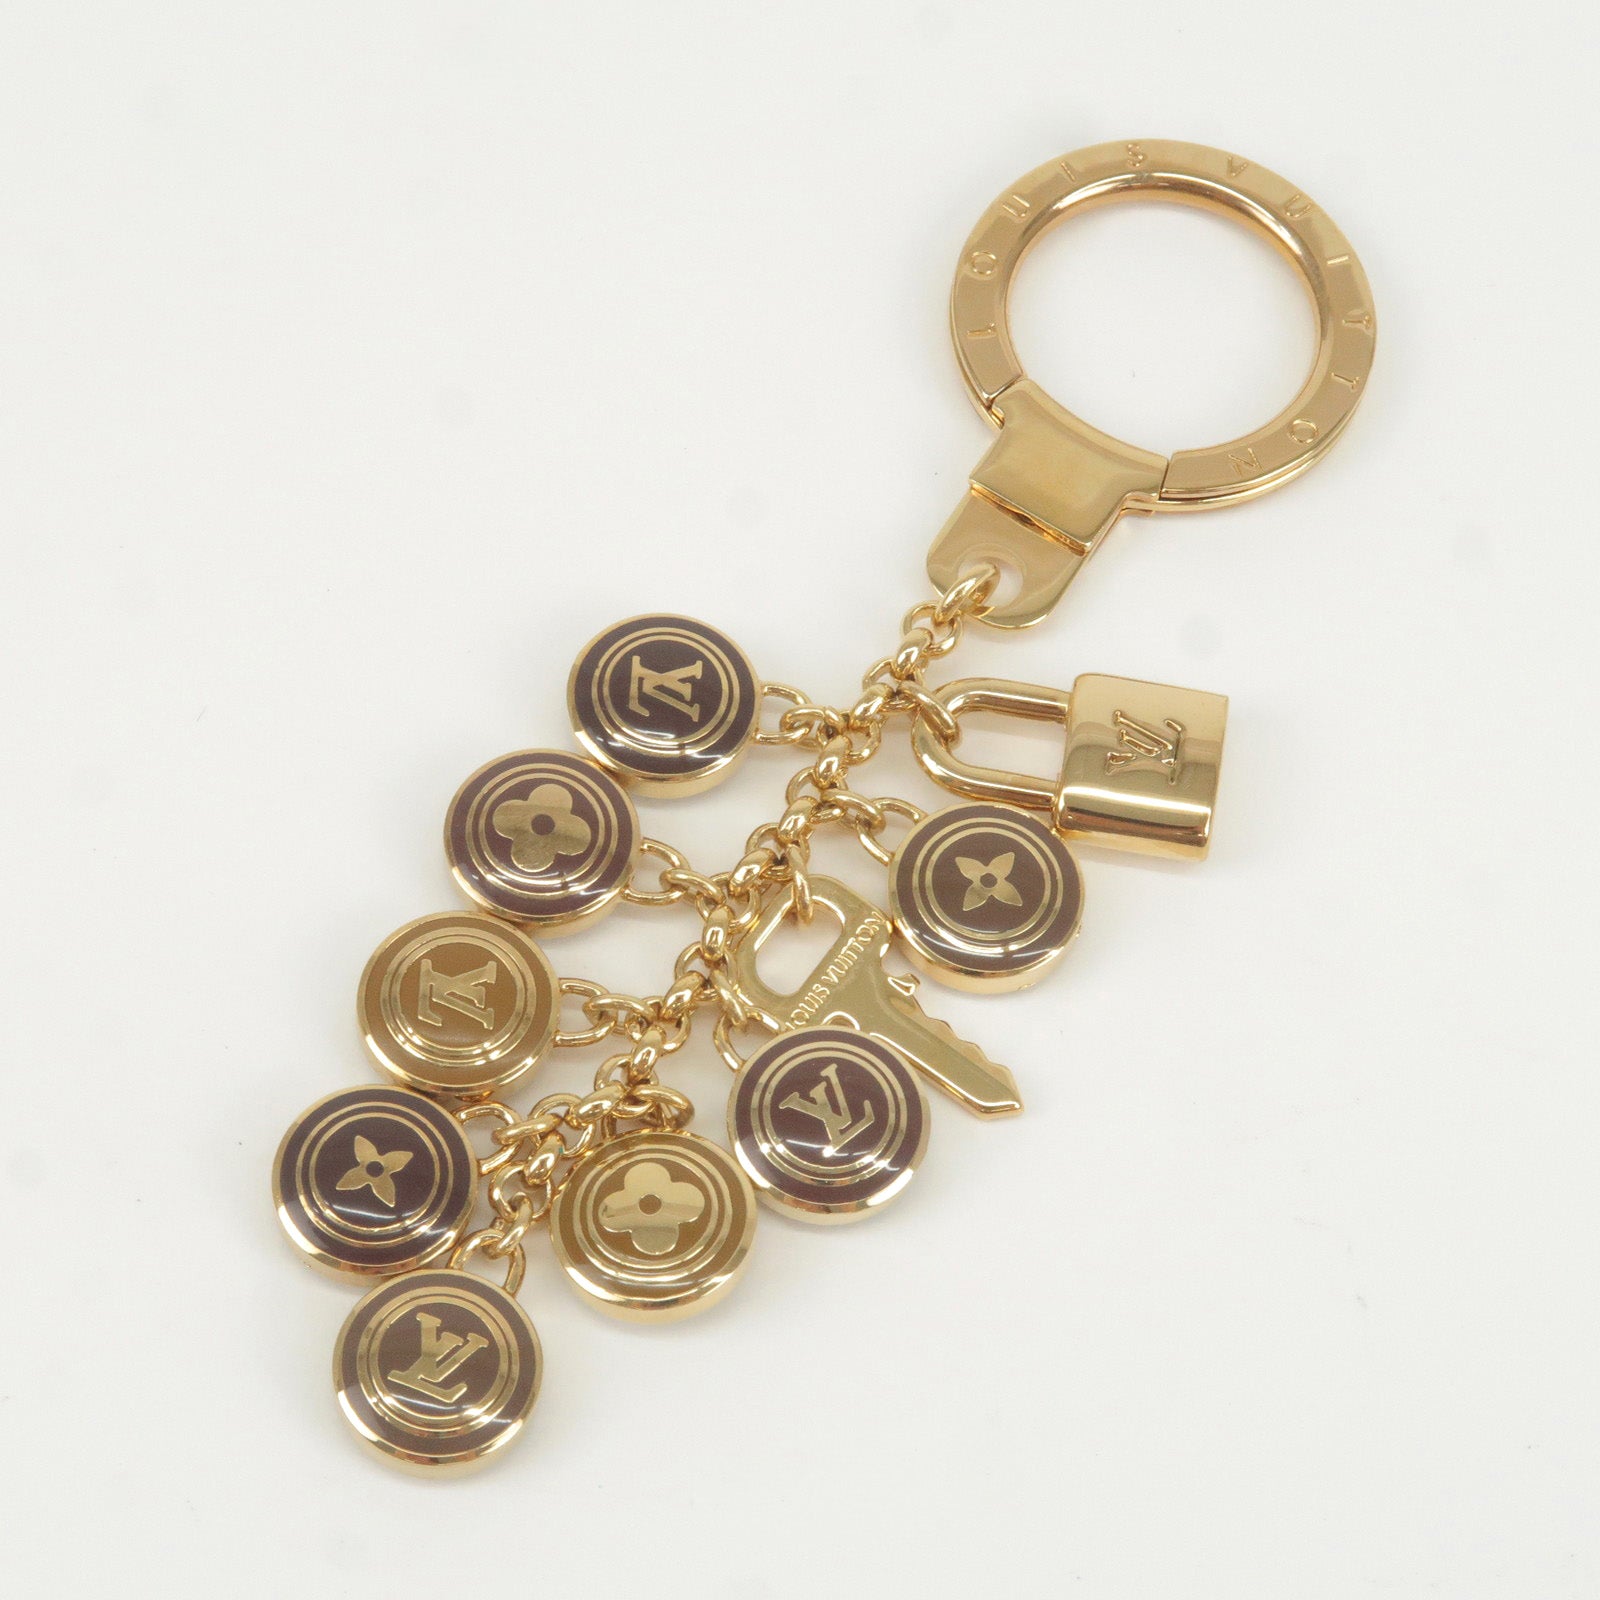 NWOT Michael Kors Silver Flower Purse Charm/Key Chain | eBay